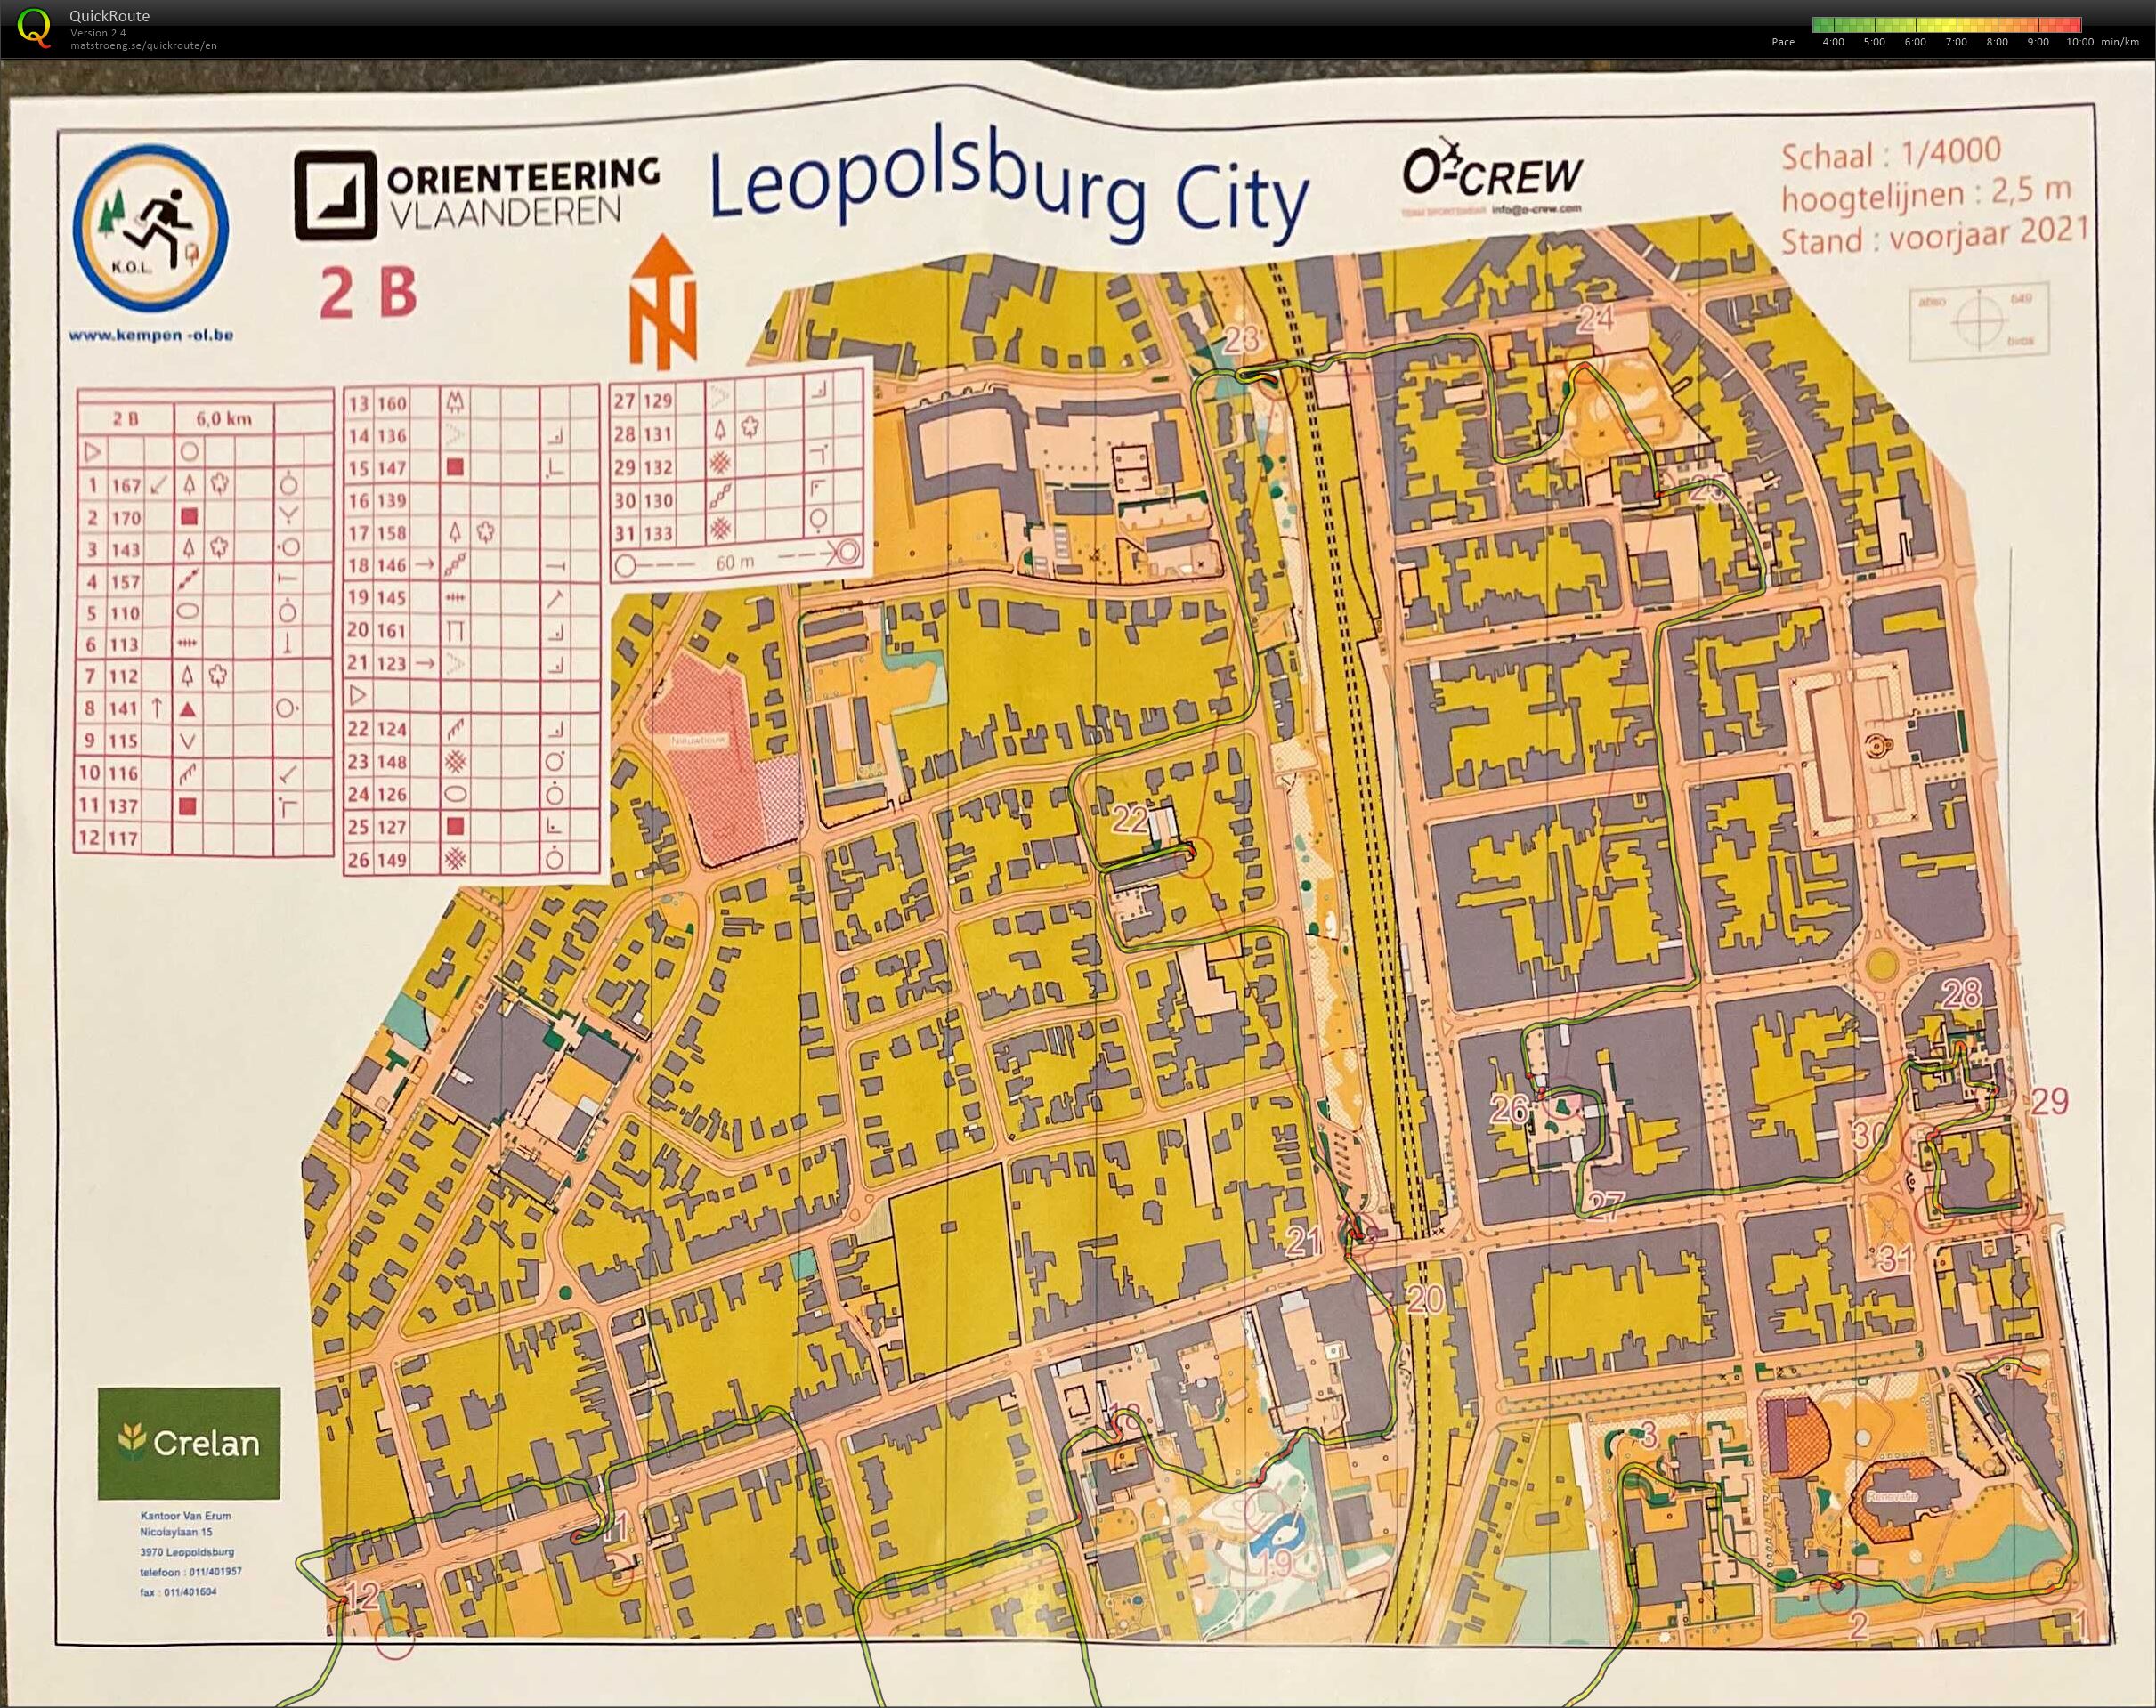 Leopoldsburg City - B (06/06/2021)